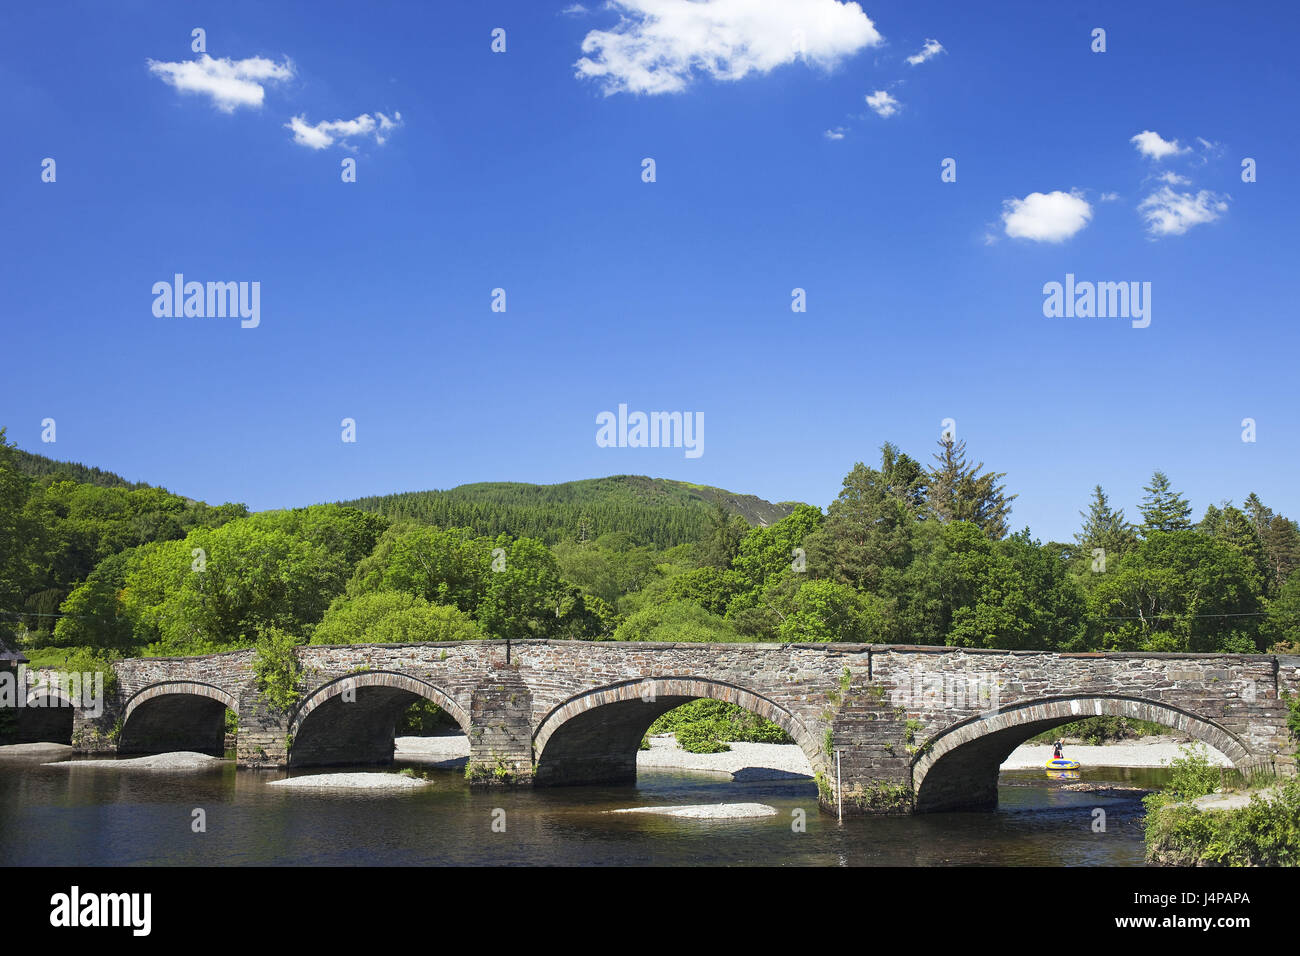 Wales, Gwynedd, Snowdonia National Park, Fluss, steinerne Brücke Stockfoto